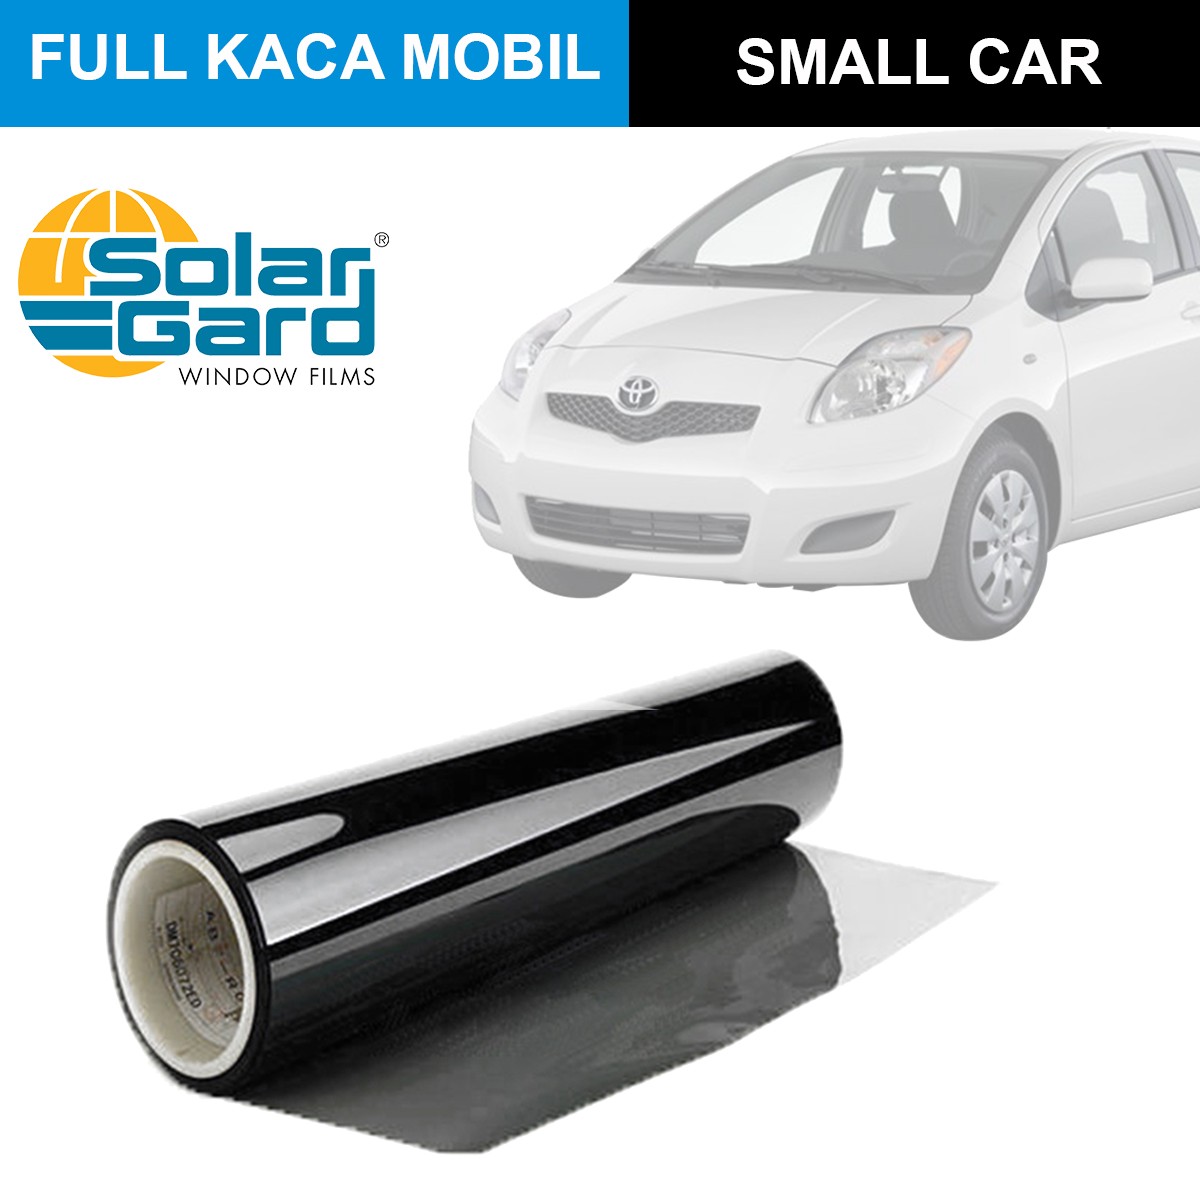 KACA FILM SOLAR GARD BEST PERFORMANCE - (SMALL CAR) FULL KACA